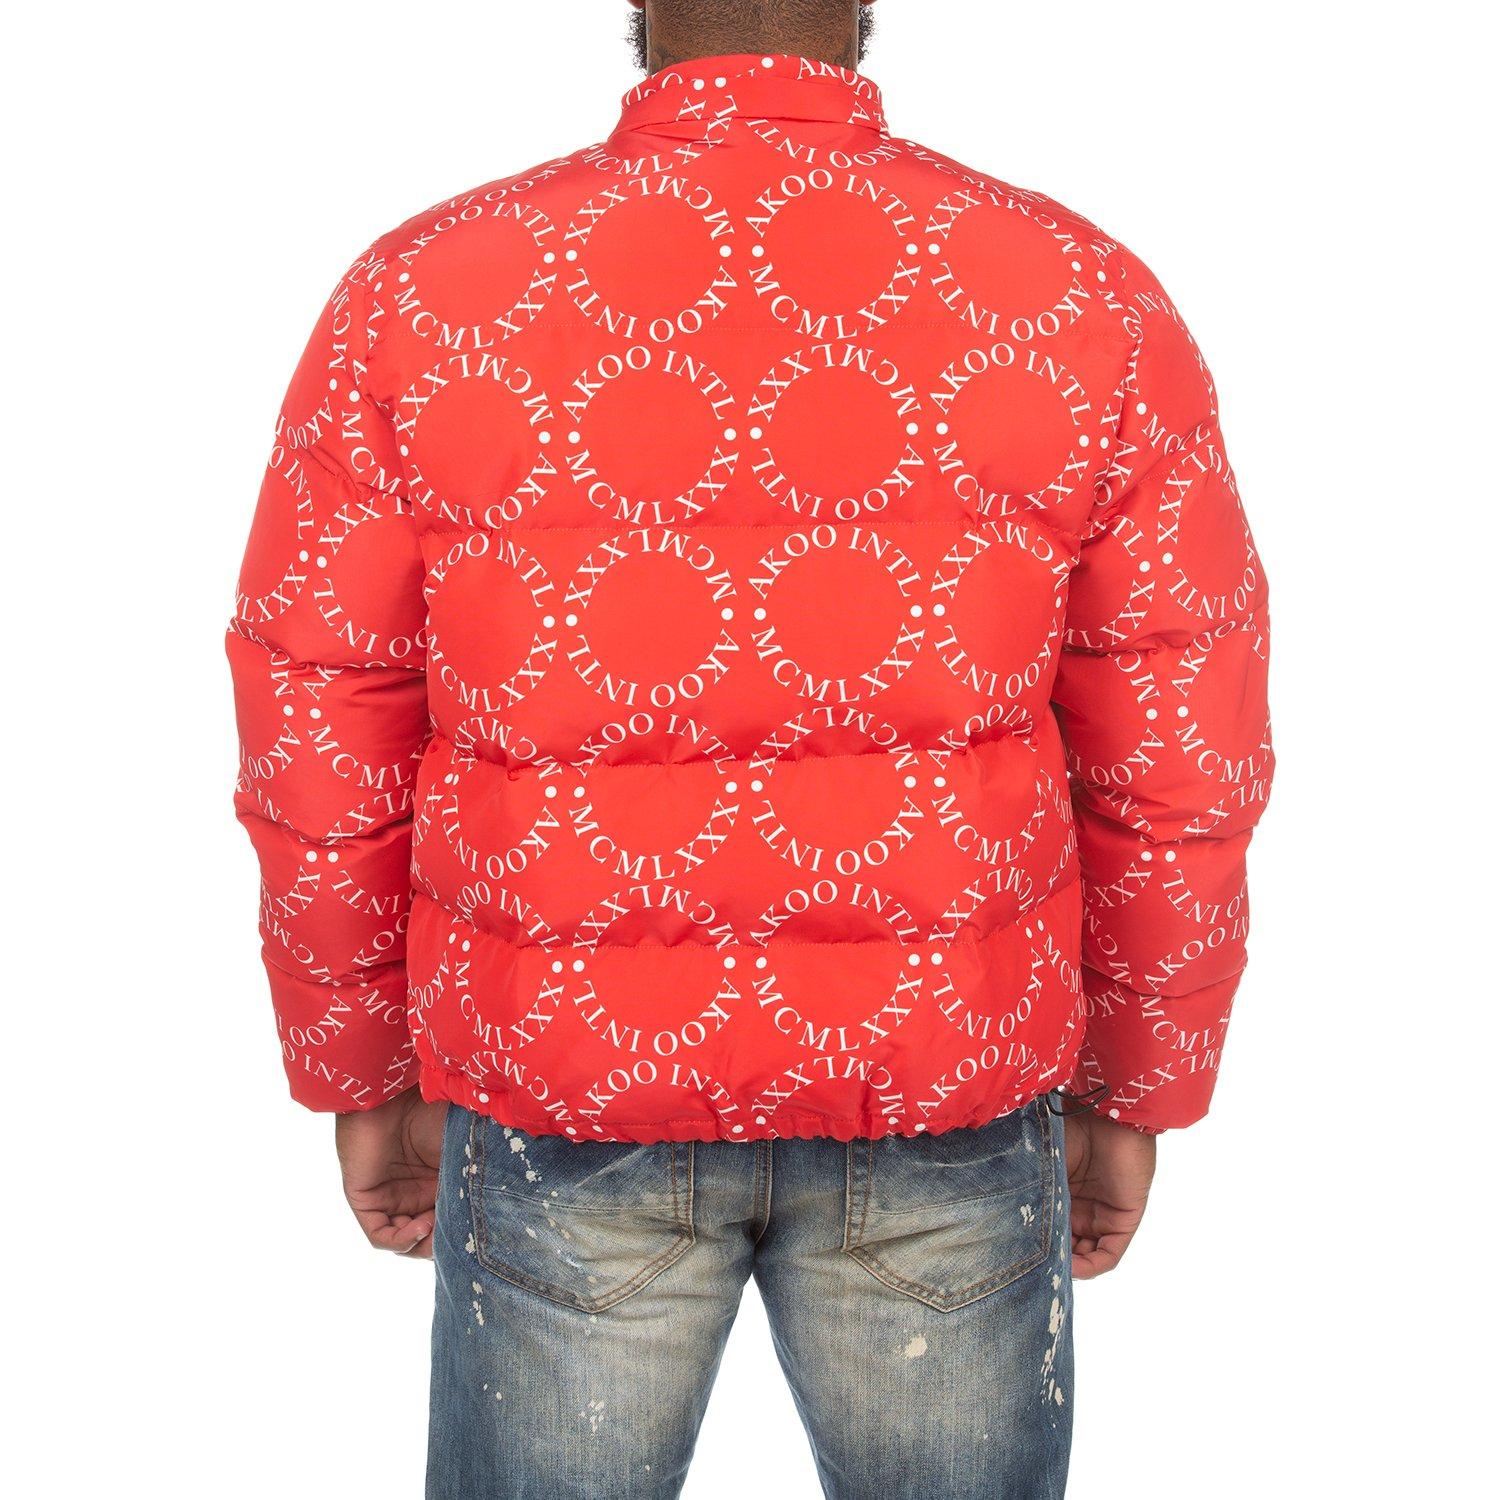 AKOO Men's International Puffer Jacket-Red/White - Hibbett